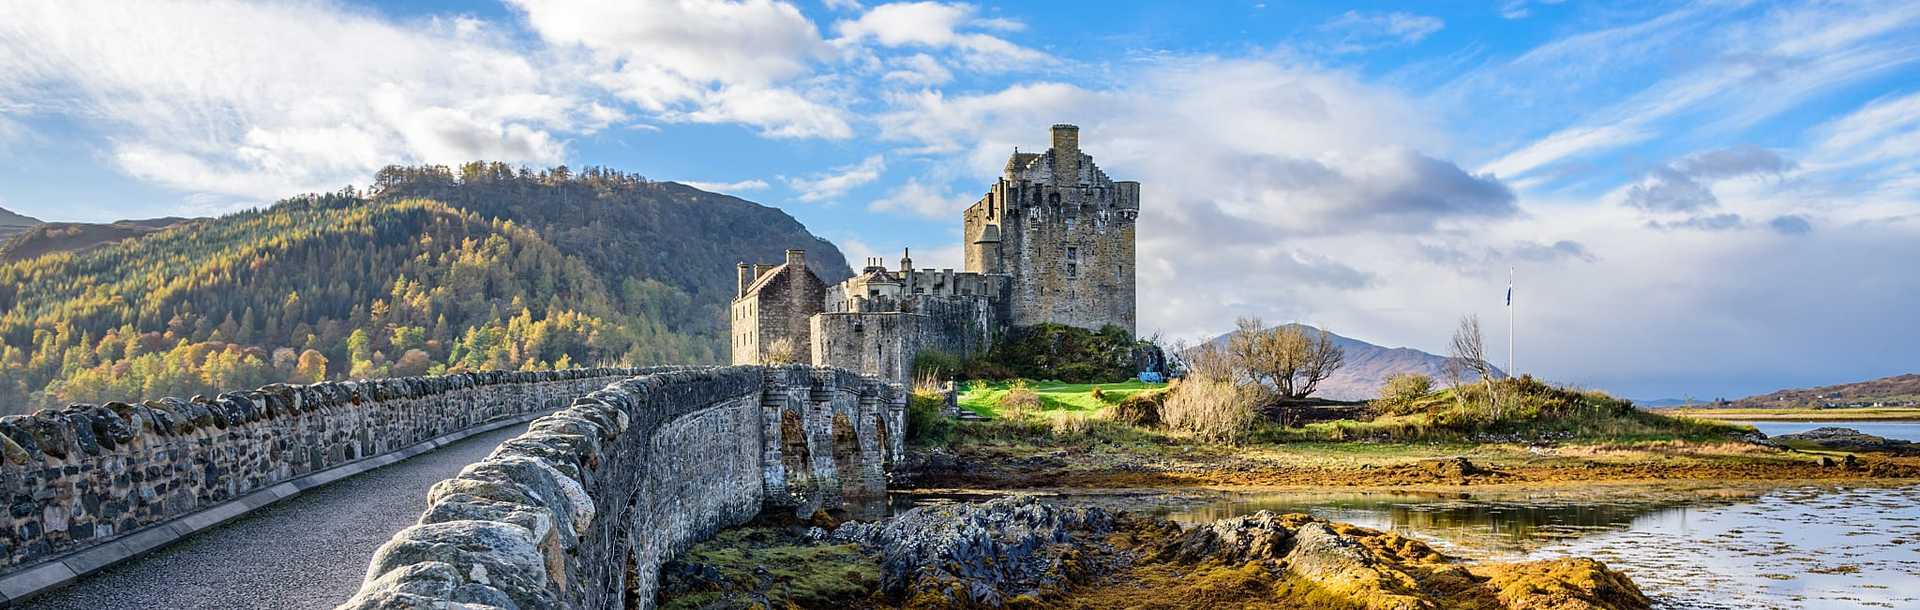 Eilean Donan castle on a sunny autumn day in Scotland.